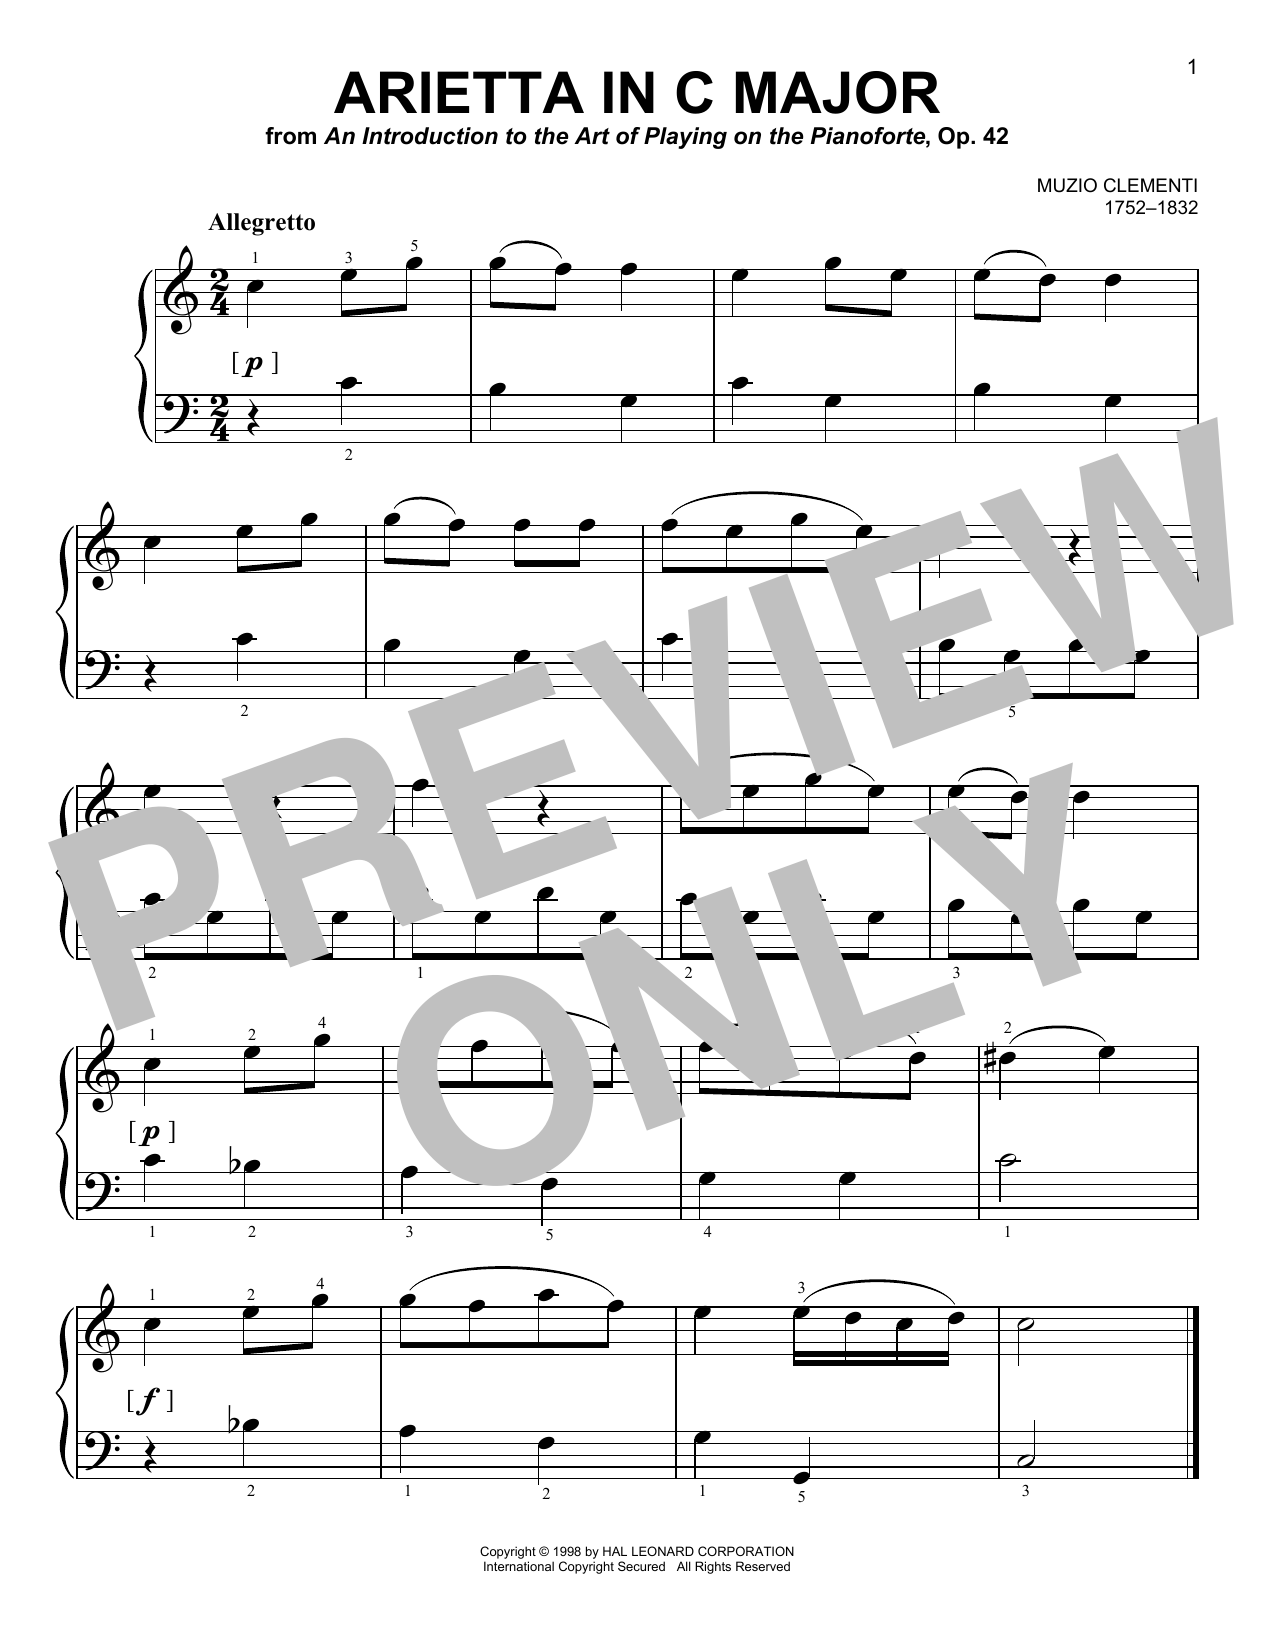 Muzio Clementi Arietta In C Major Sheet Music Notes & Chords for Piano Solo - Download or Print PDF